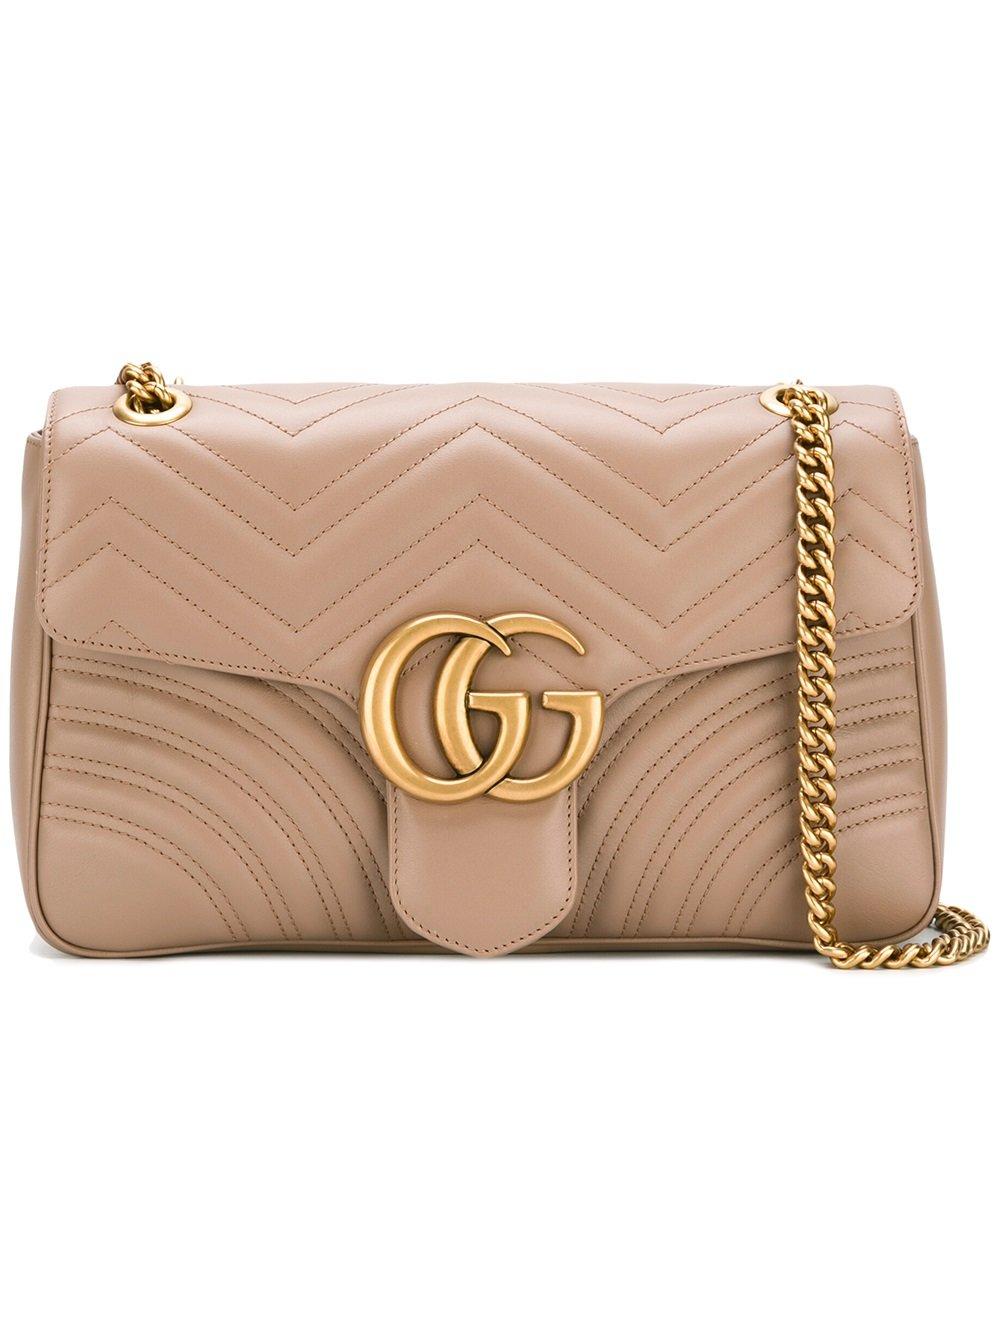 Lyst - Gucci Medium Gg Marmont Matelassé Shoulder Bag in Natural